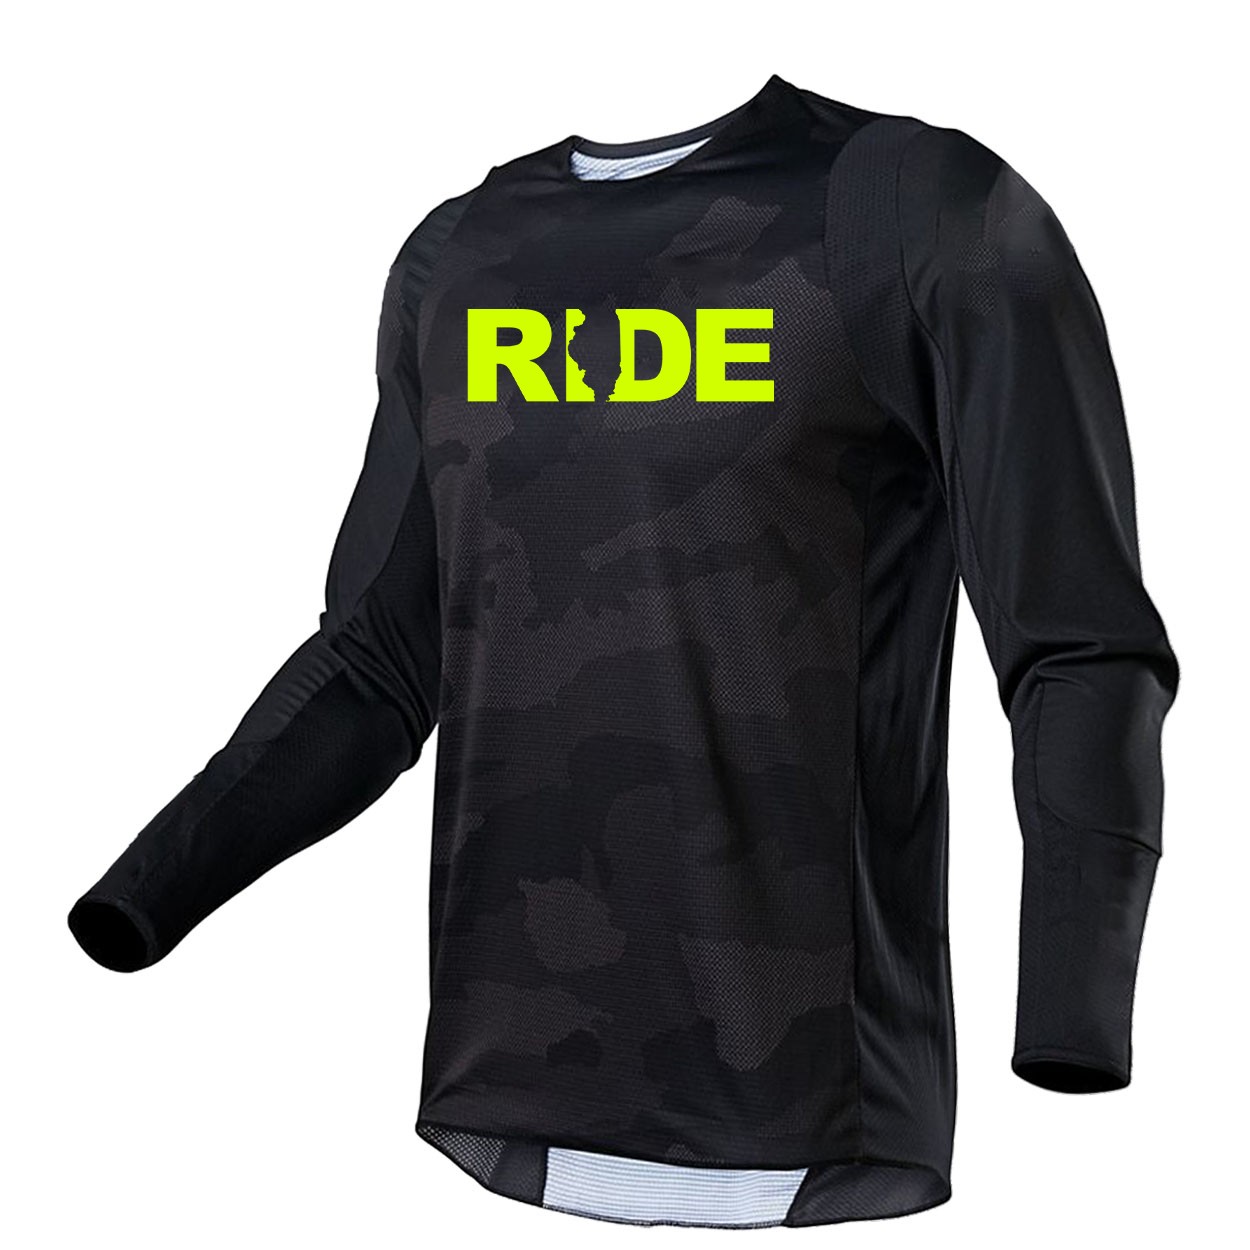 Ride Illinois Classic Performance Jersey Long Sleeve Shirt Black Camo (Hi-Vis Logo)